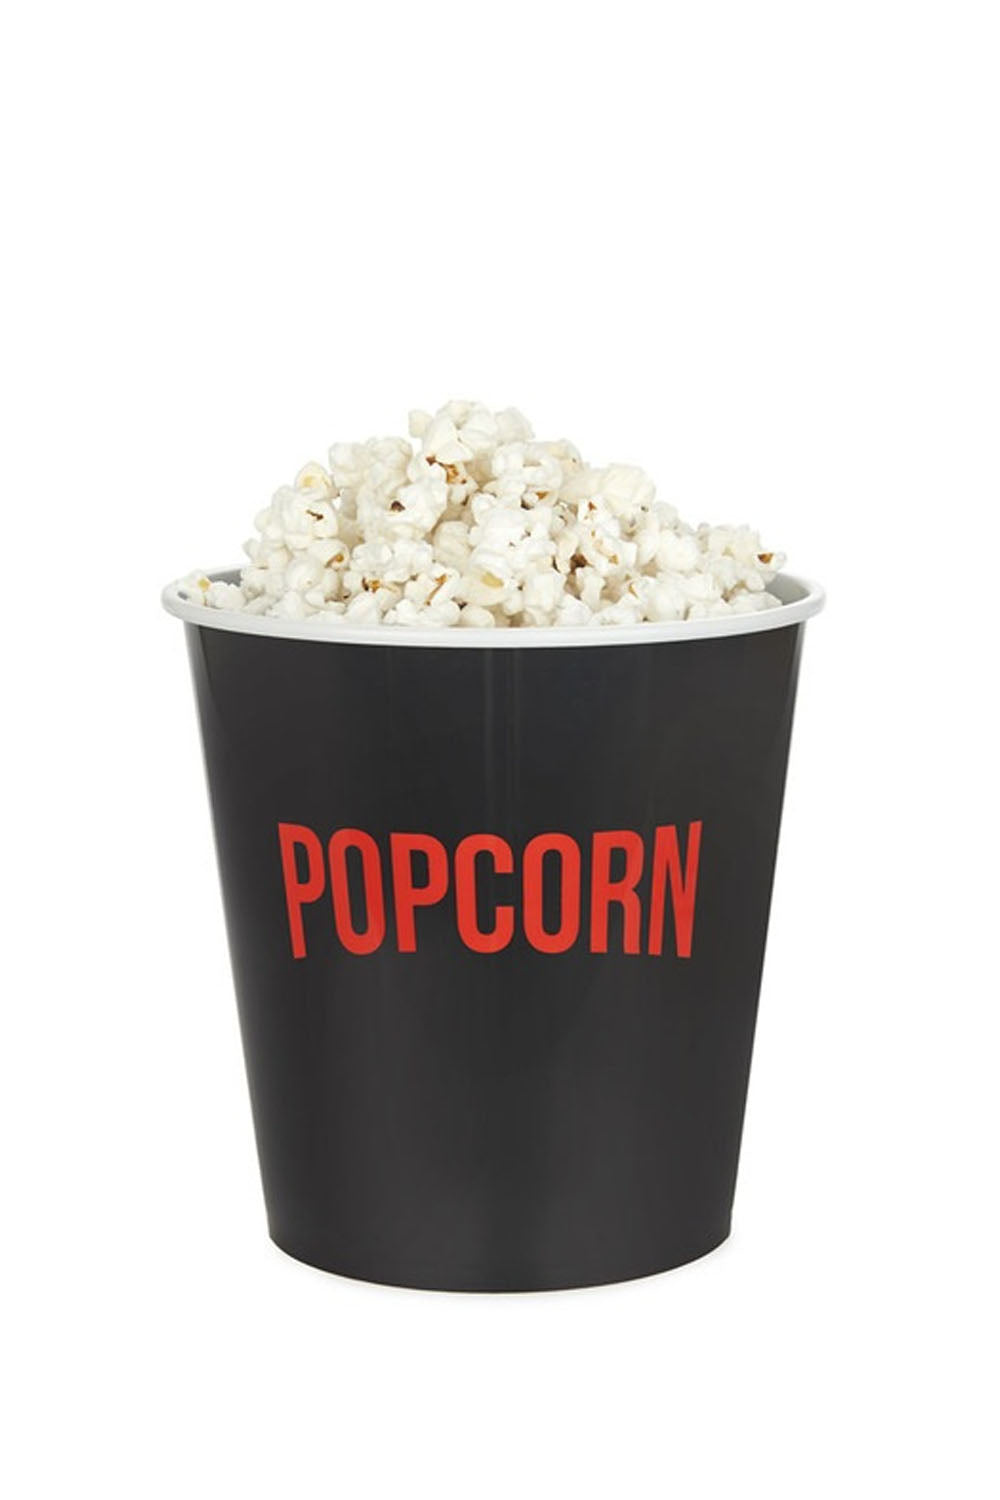 Pop Corn Bowl, Popcorn Streaming, 2.8L